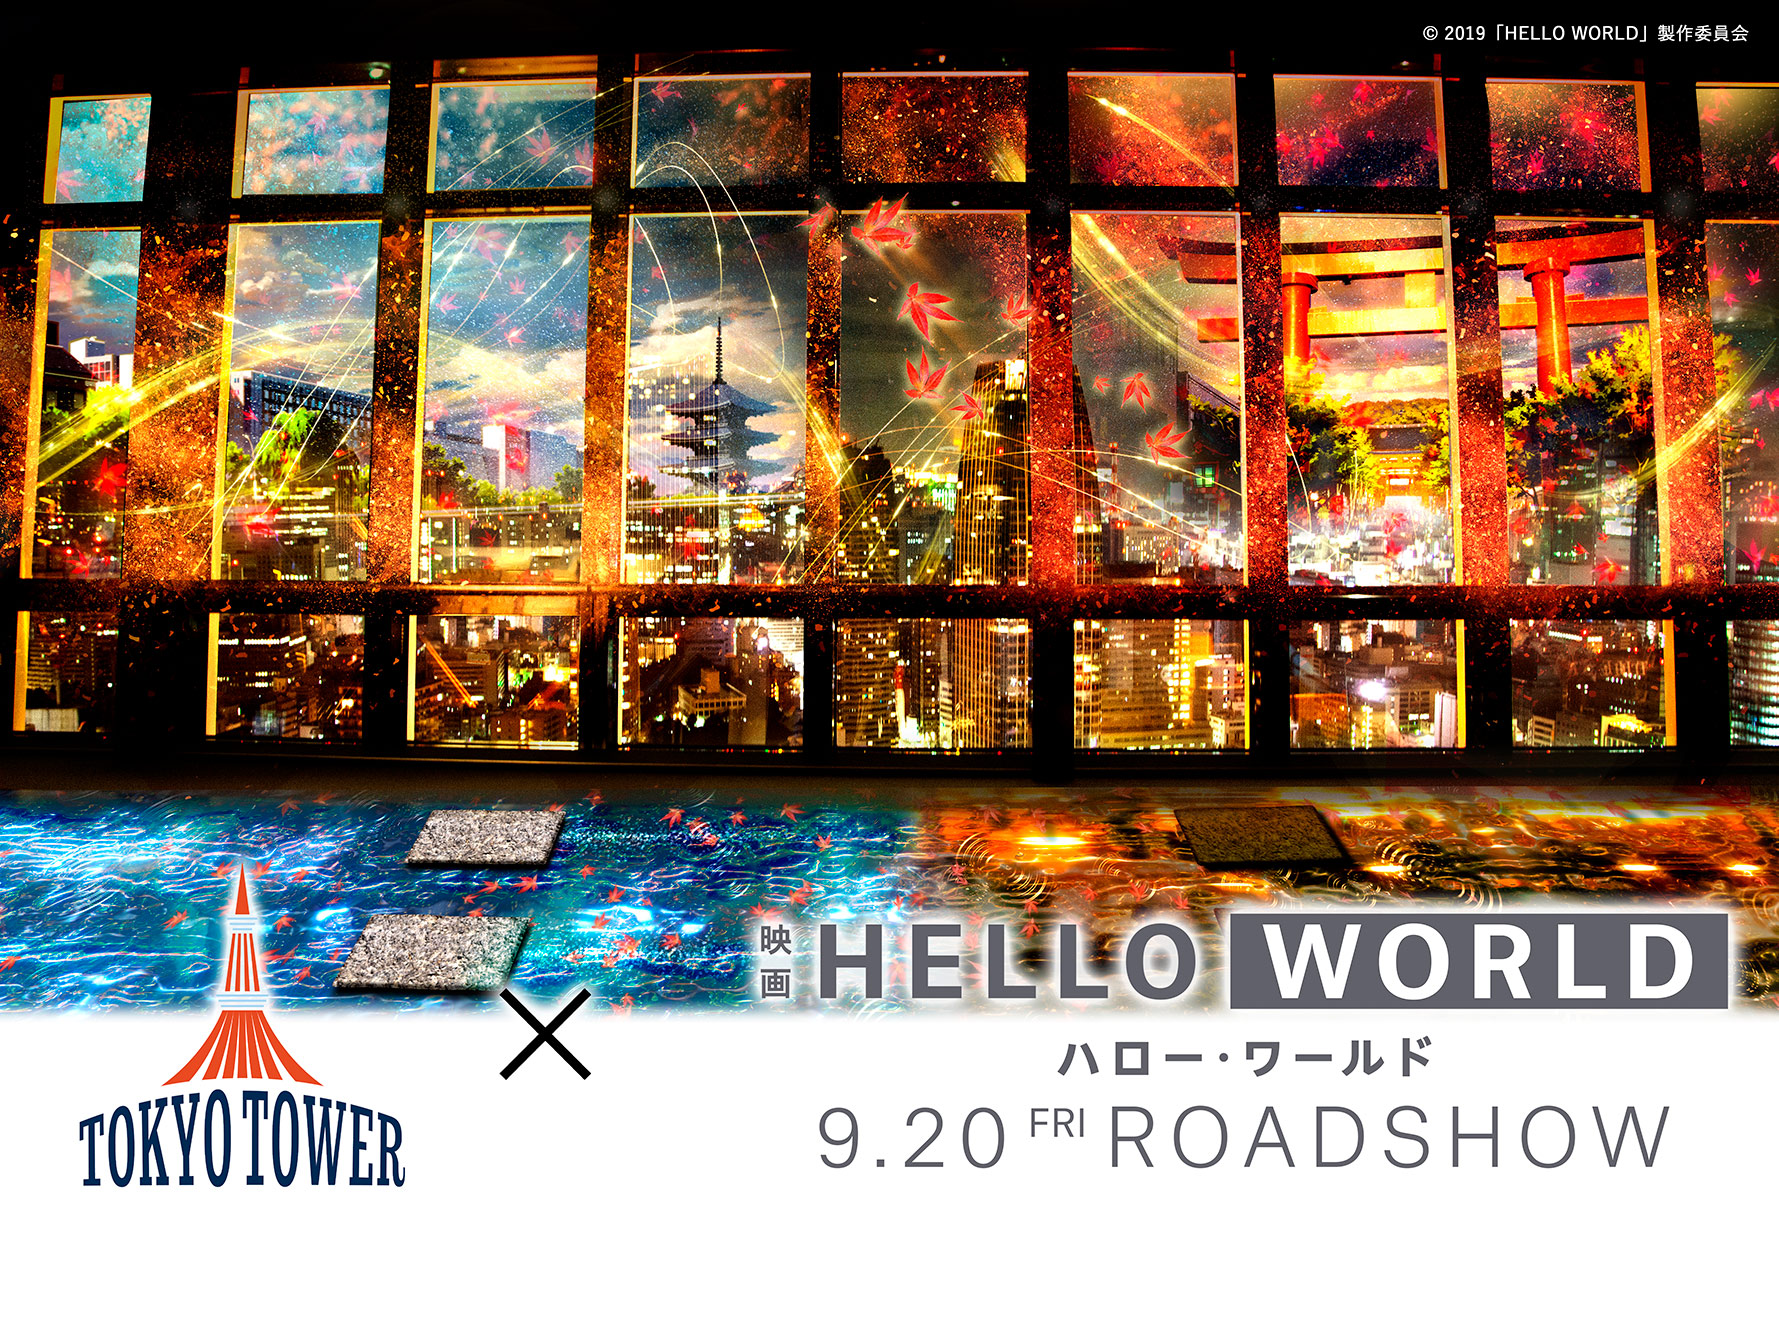 TOKYO TOWER CITY LIGHT FANTASIA 〜“HELLO WORLD” TOKYO TO KYOTO〜